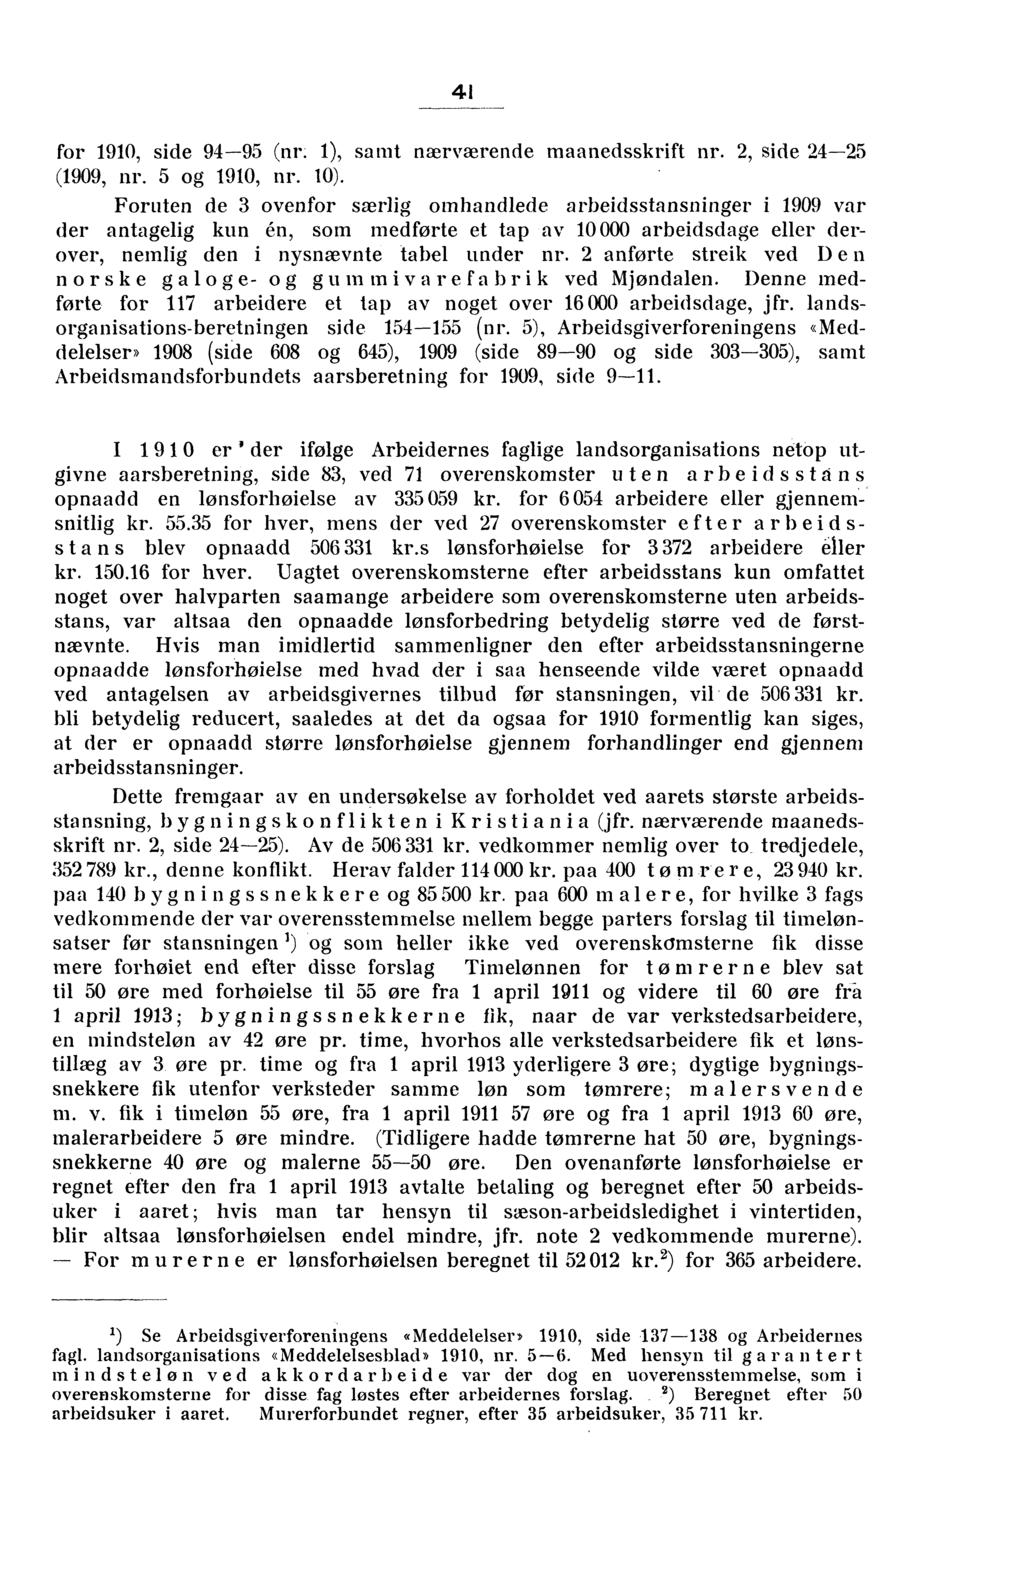 41 for 1910, side 94-95 (nr. 1), samt nærværende maanedsskrift nr. 2, side 24-25 (1909, nr. 5 og 1910, nr. 10).